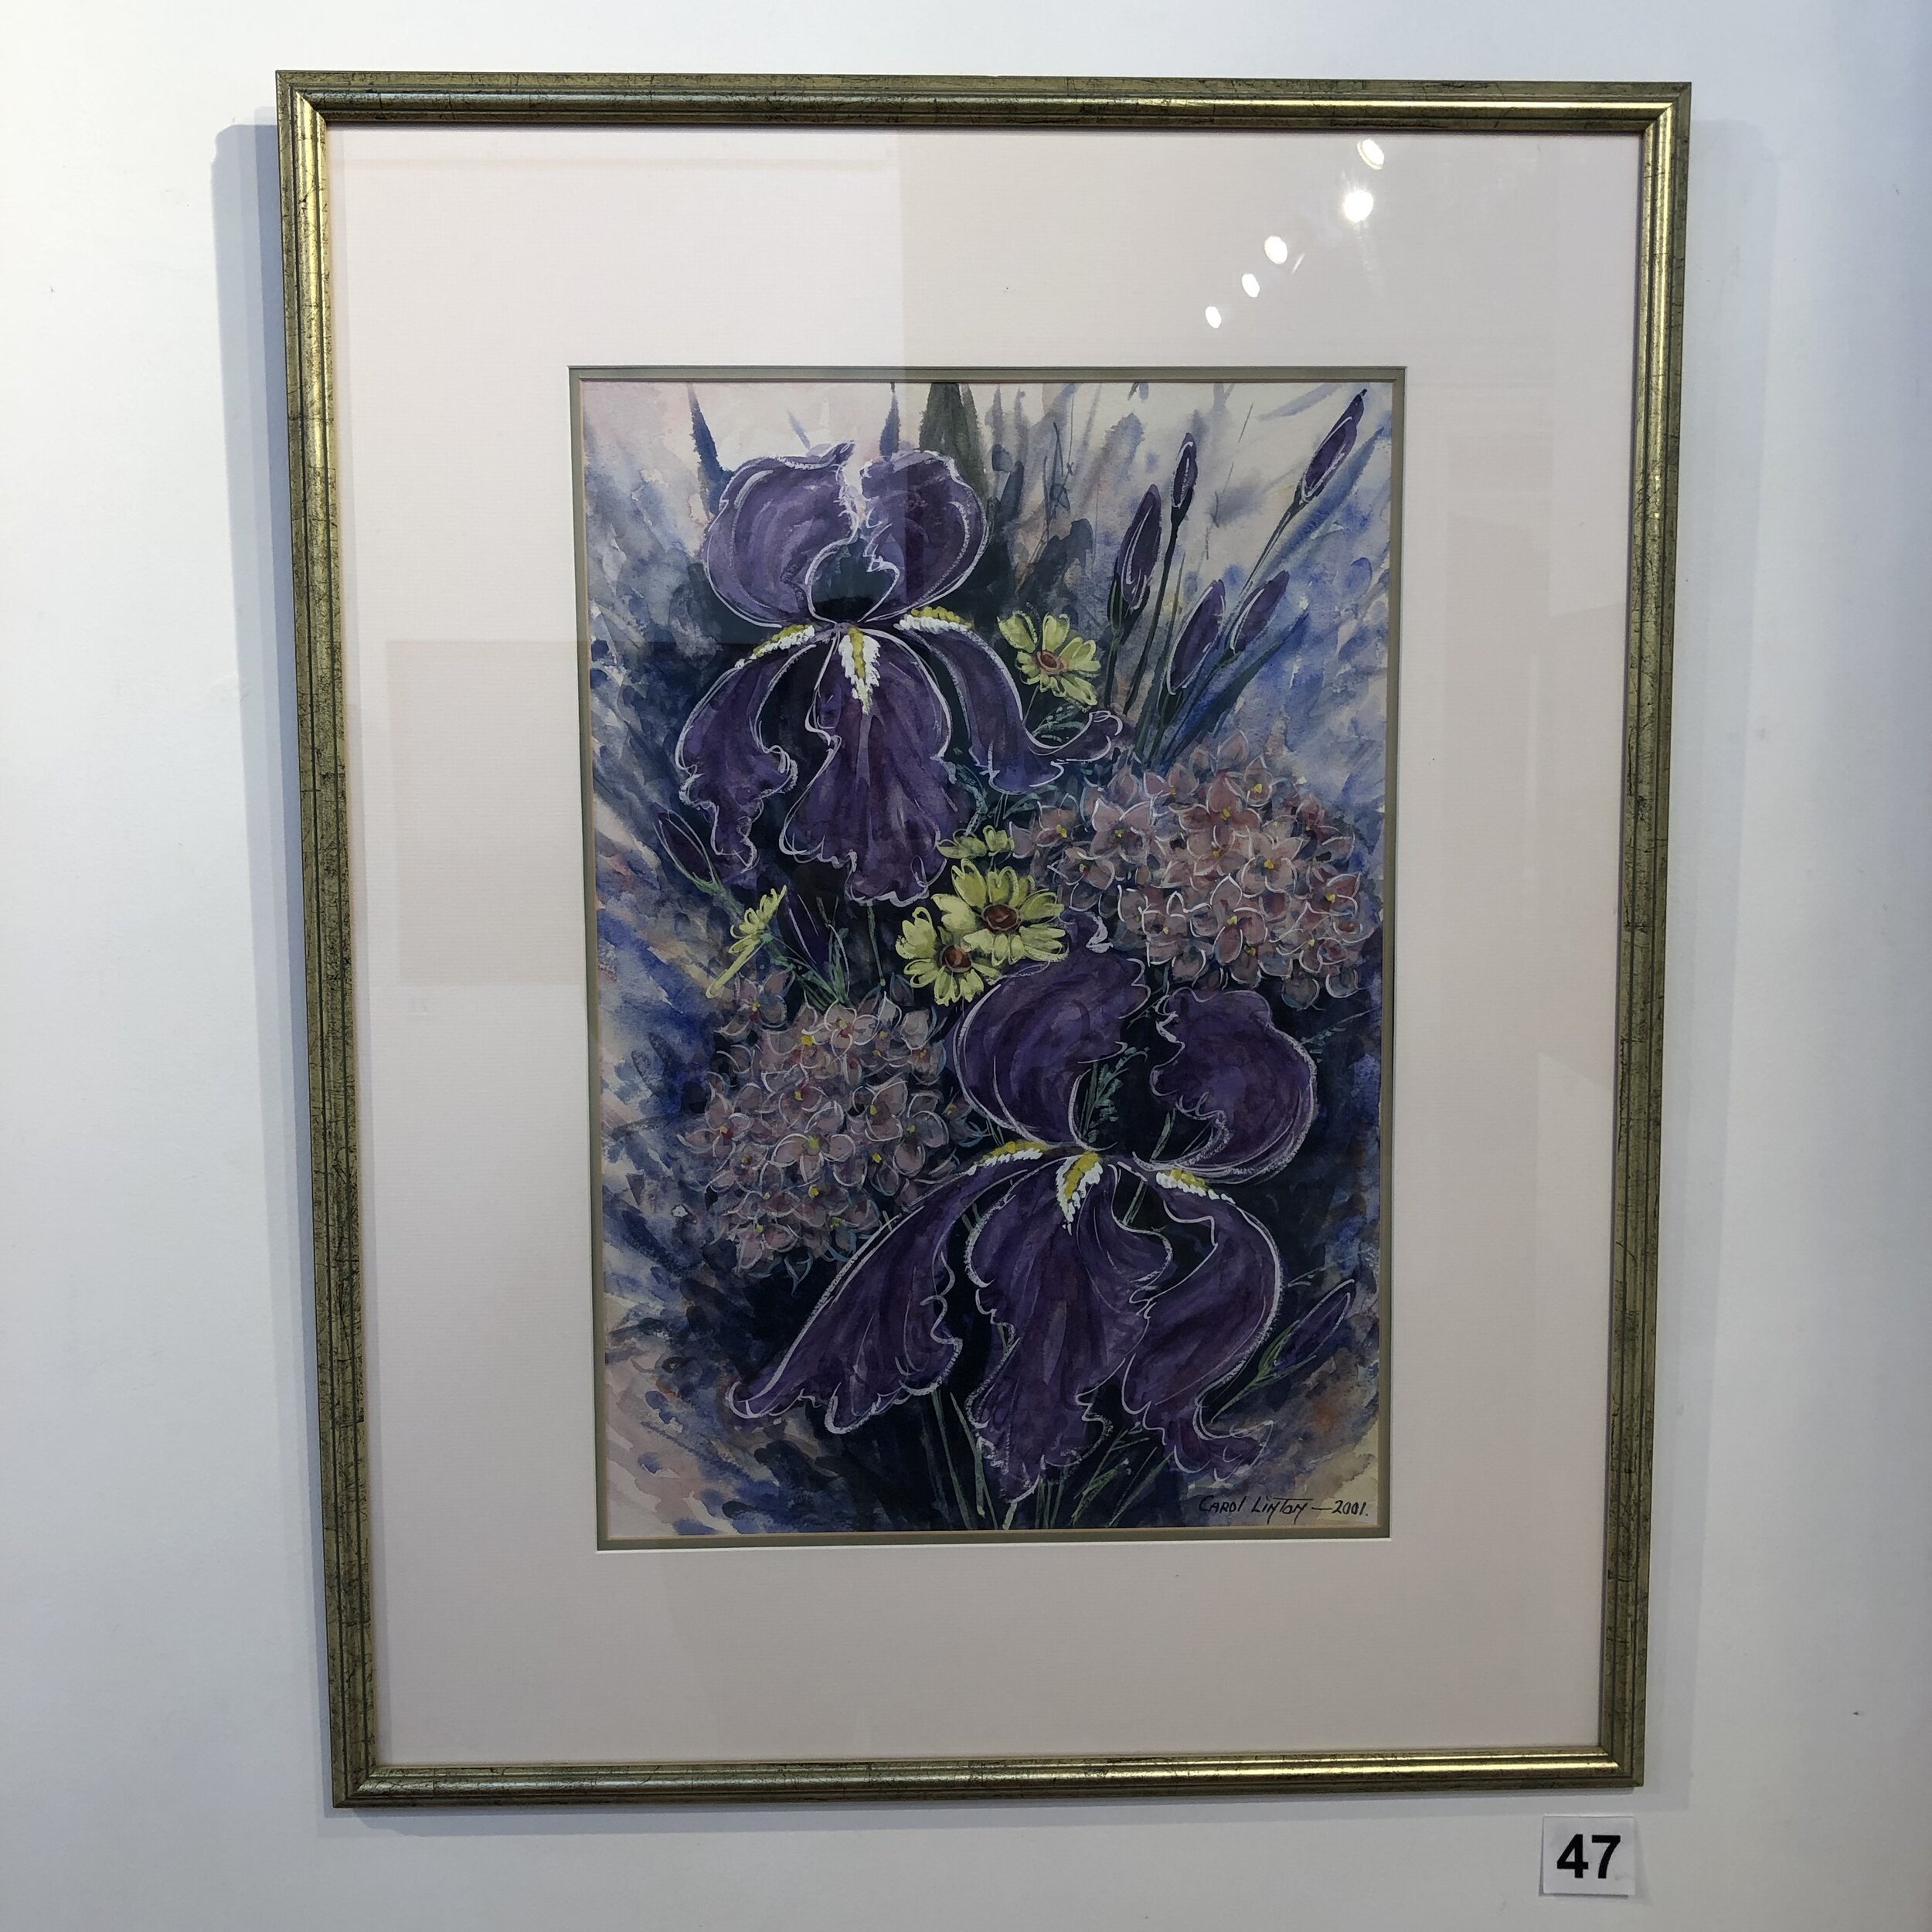 "Irises and Hydrangeas" by Carol Linton